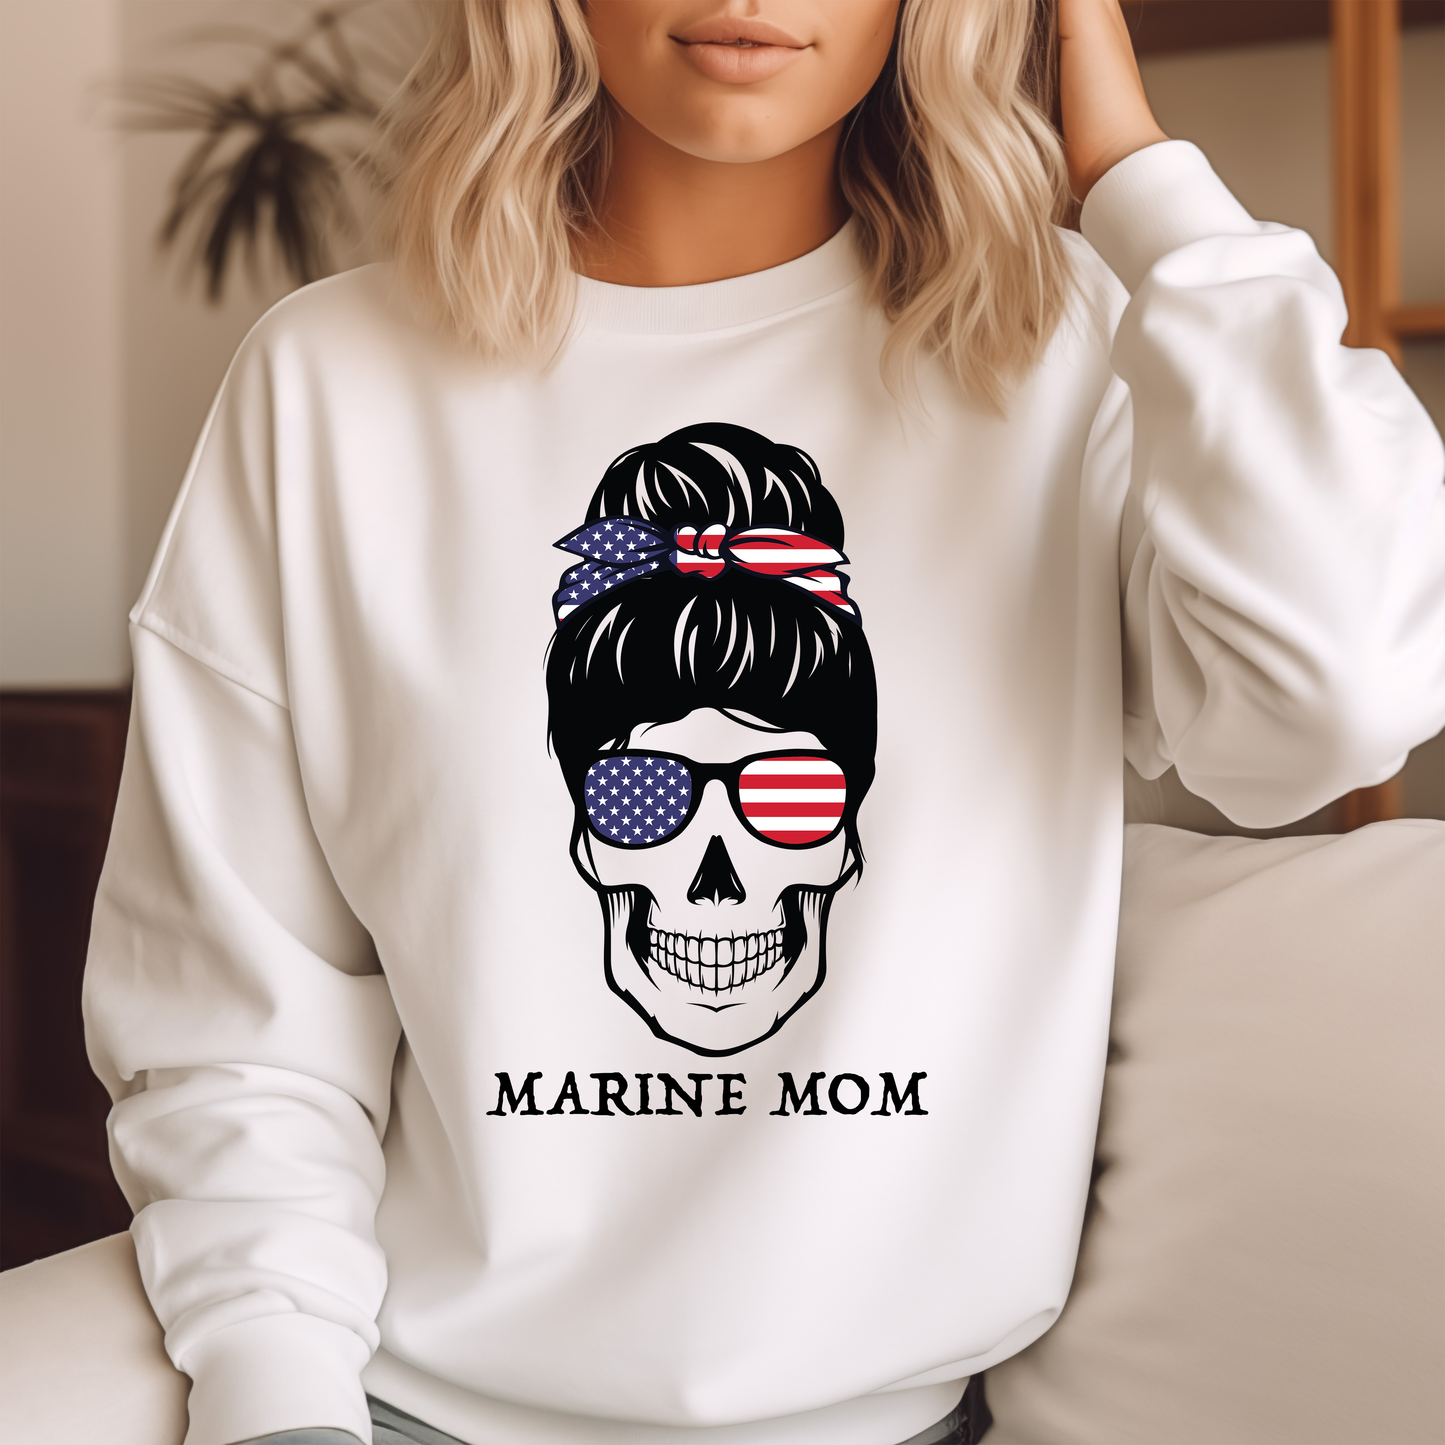 a woman wearing a sweatshirt with a skull wearing sunglasses